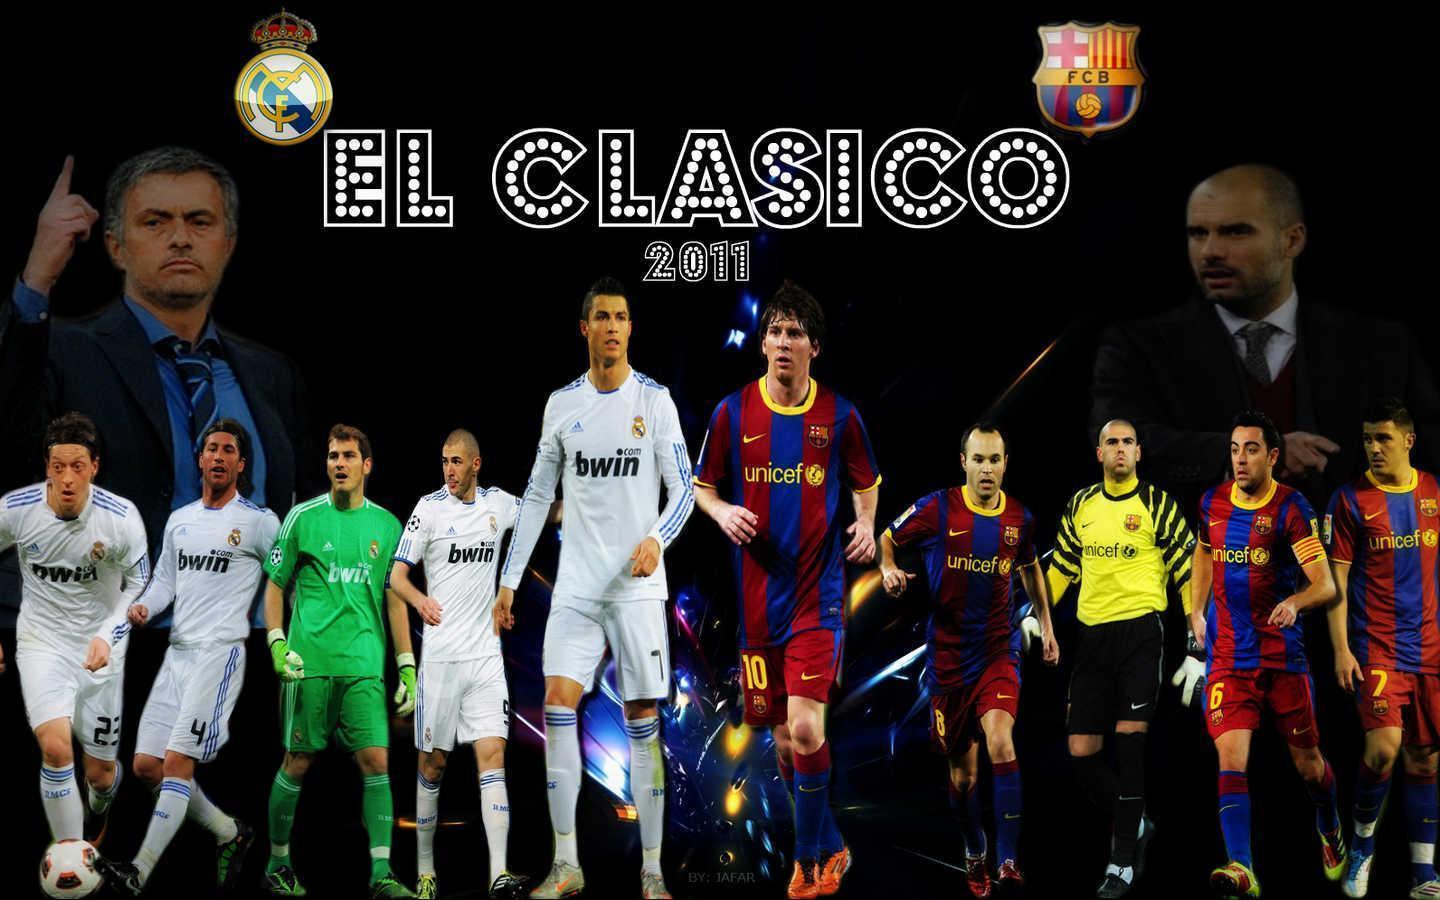 Real Madrid Vs Barcelona Wallpaper